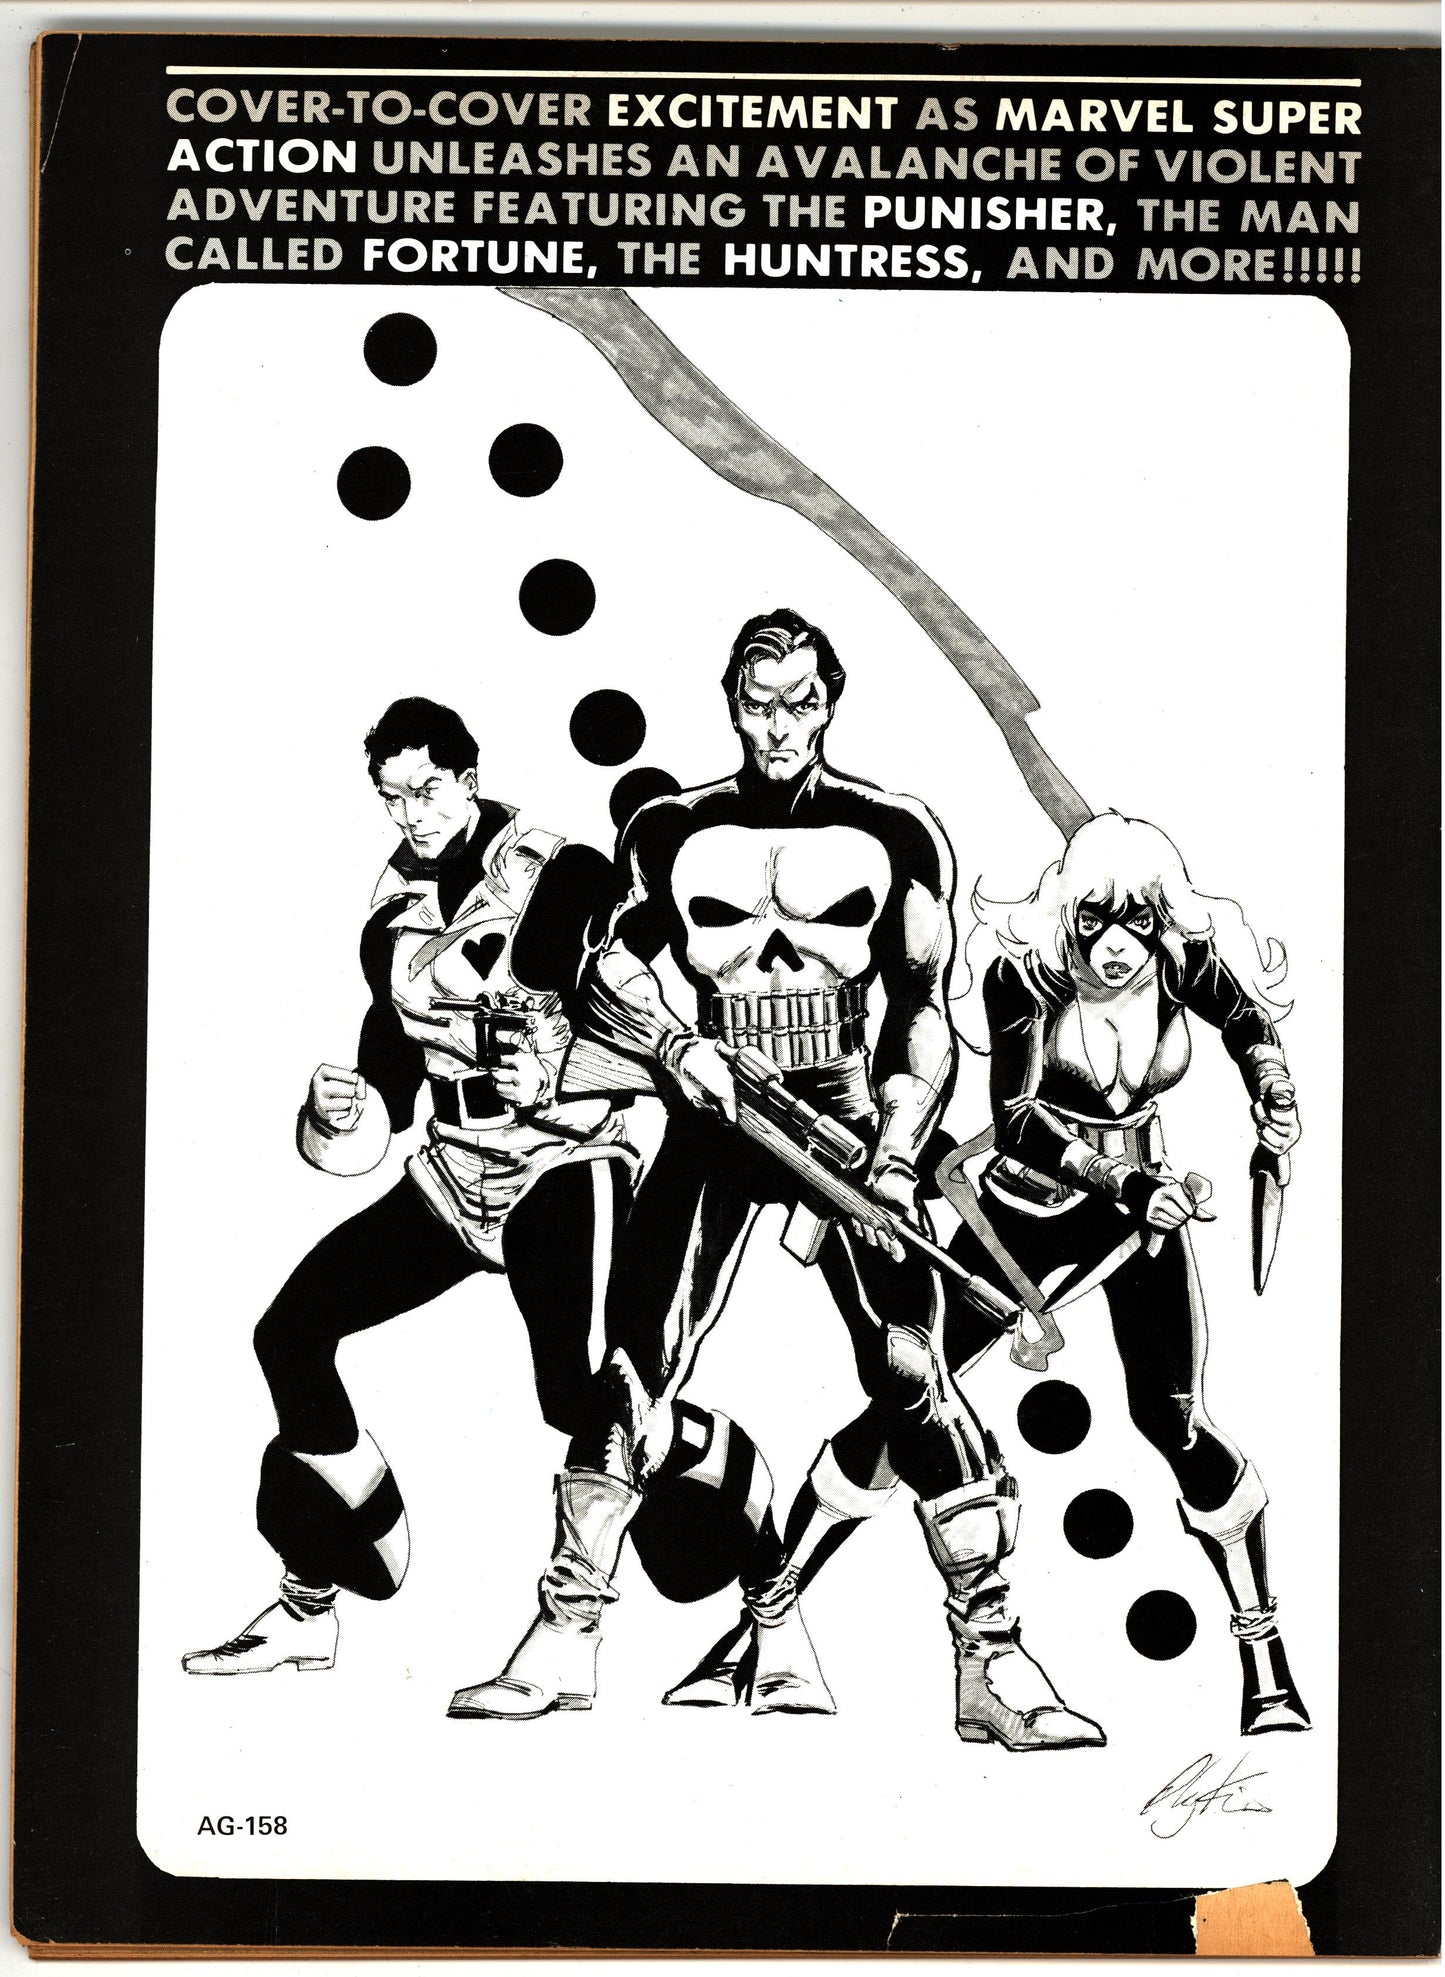 Marvel Super Action #1 (1976) Curtis Magazine